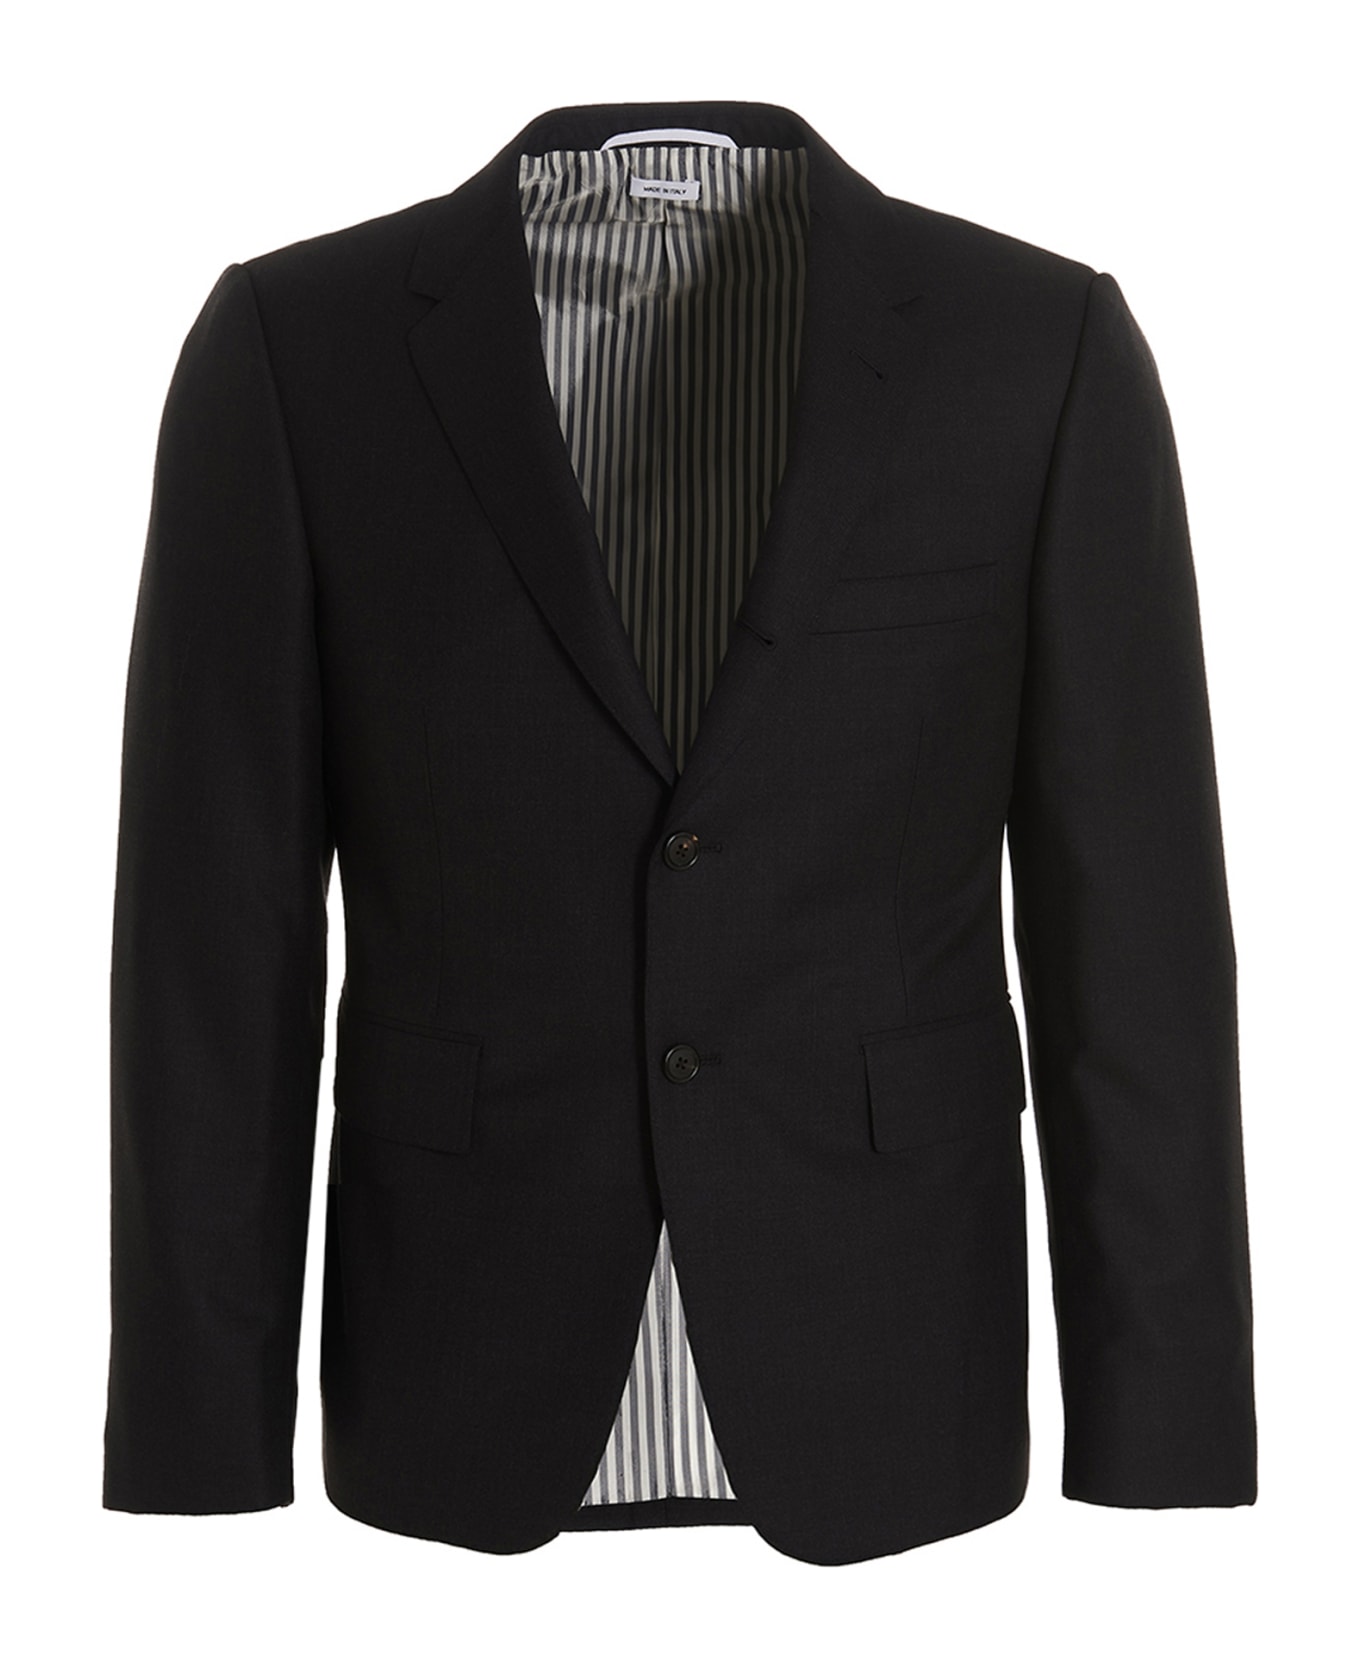 Thom Browne Classic Suit - GREY